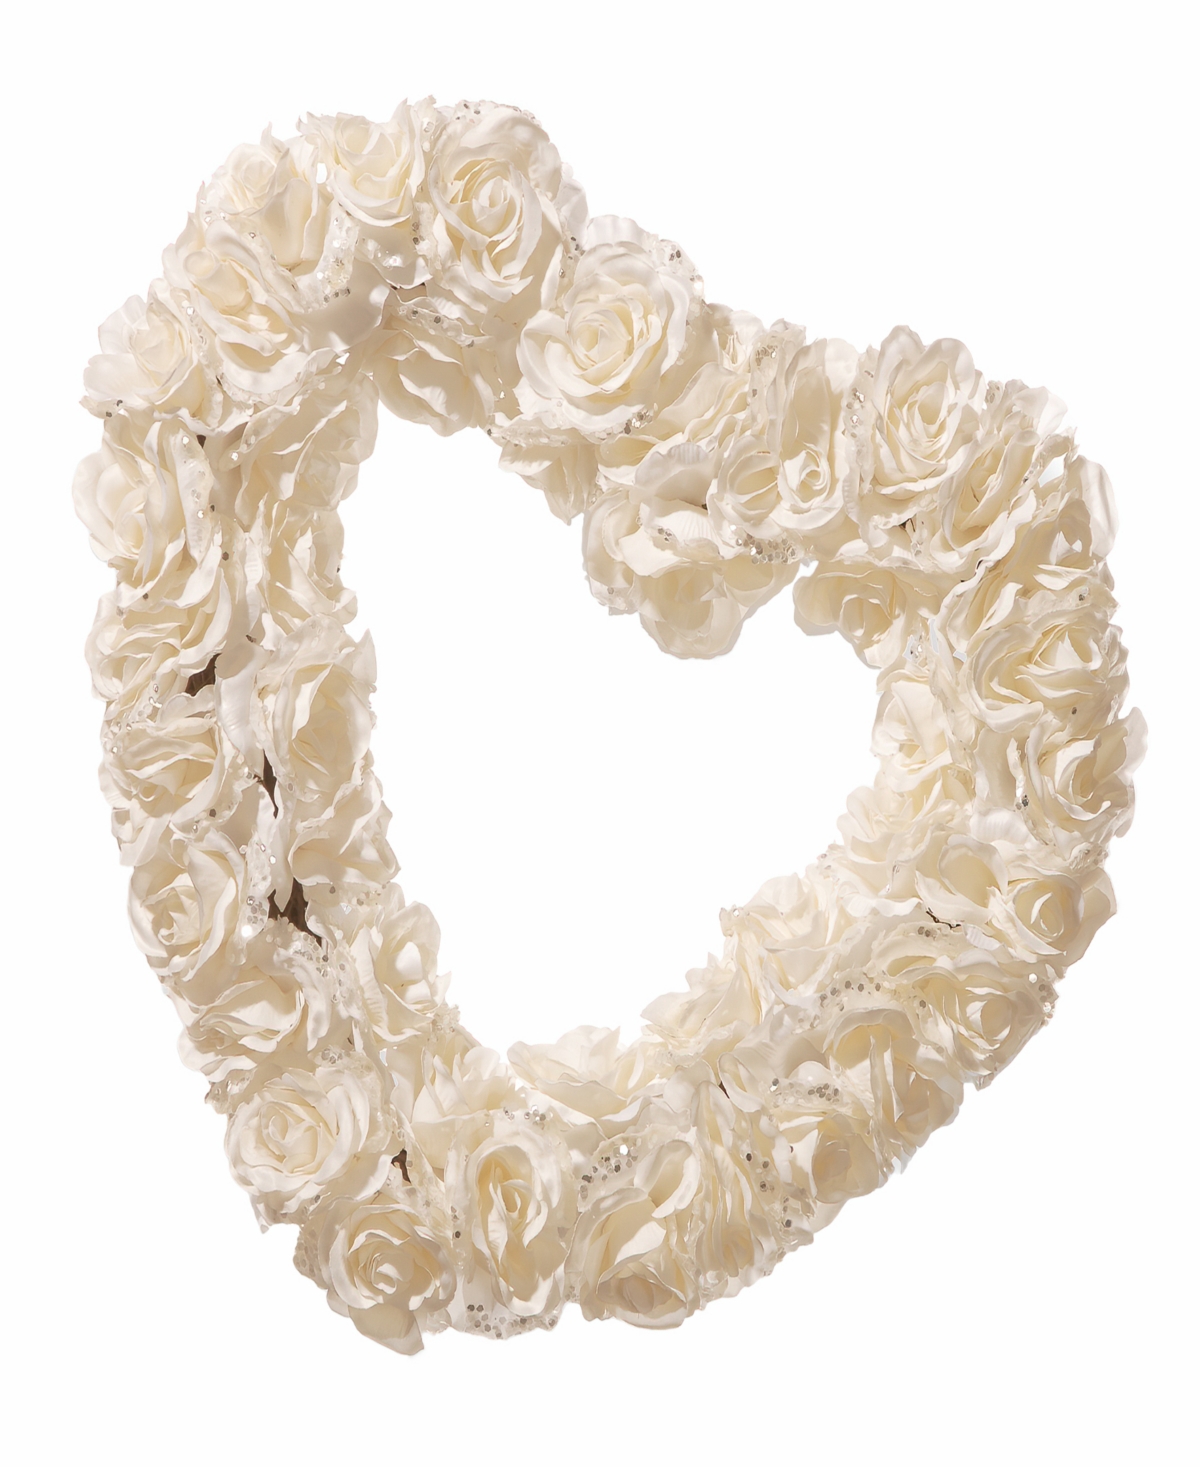 17" Rose Heart Wreath - White